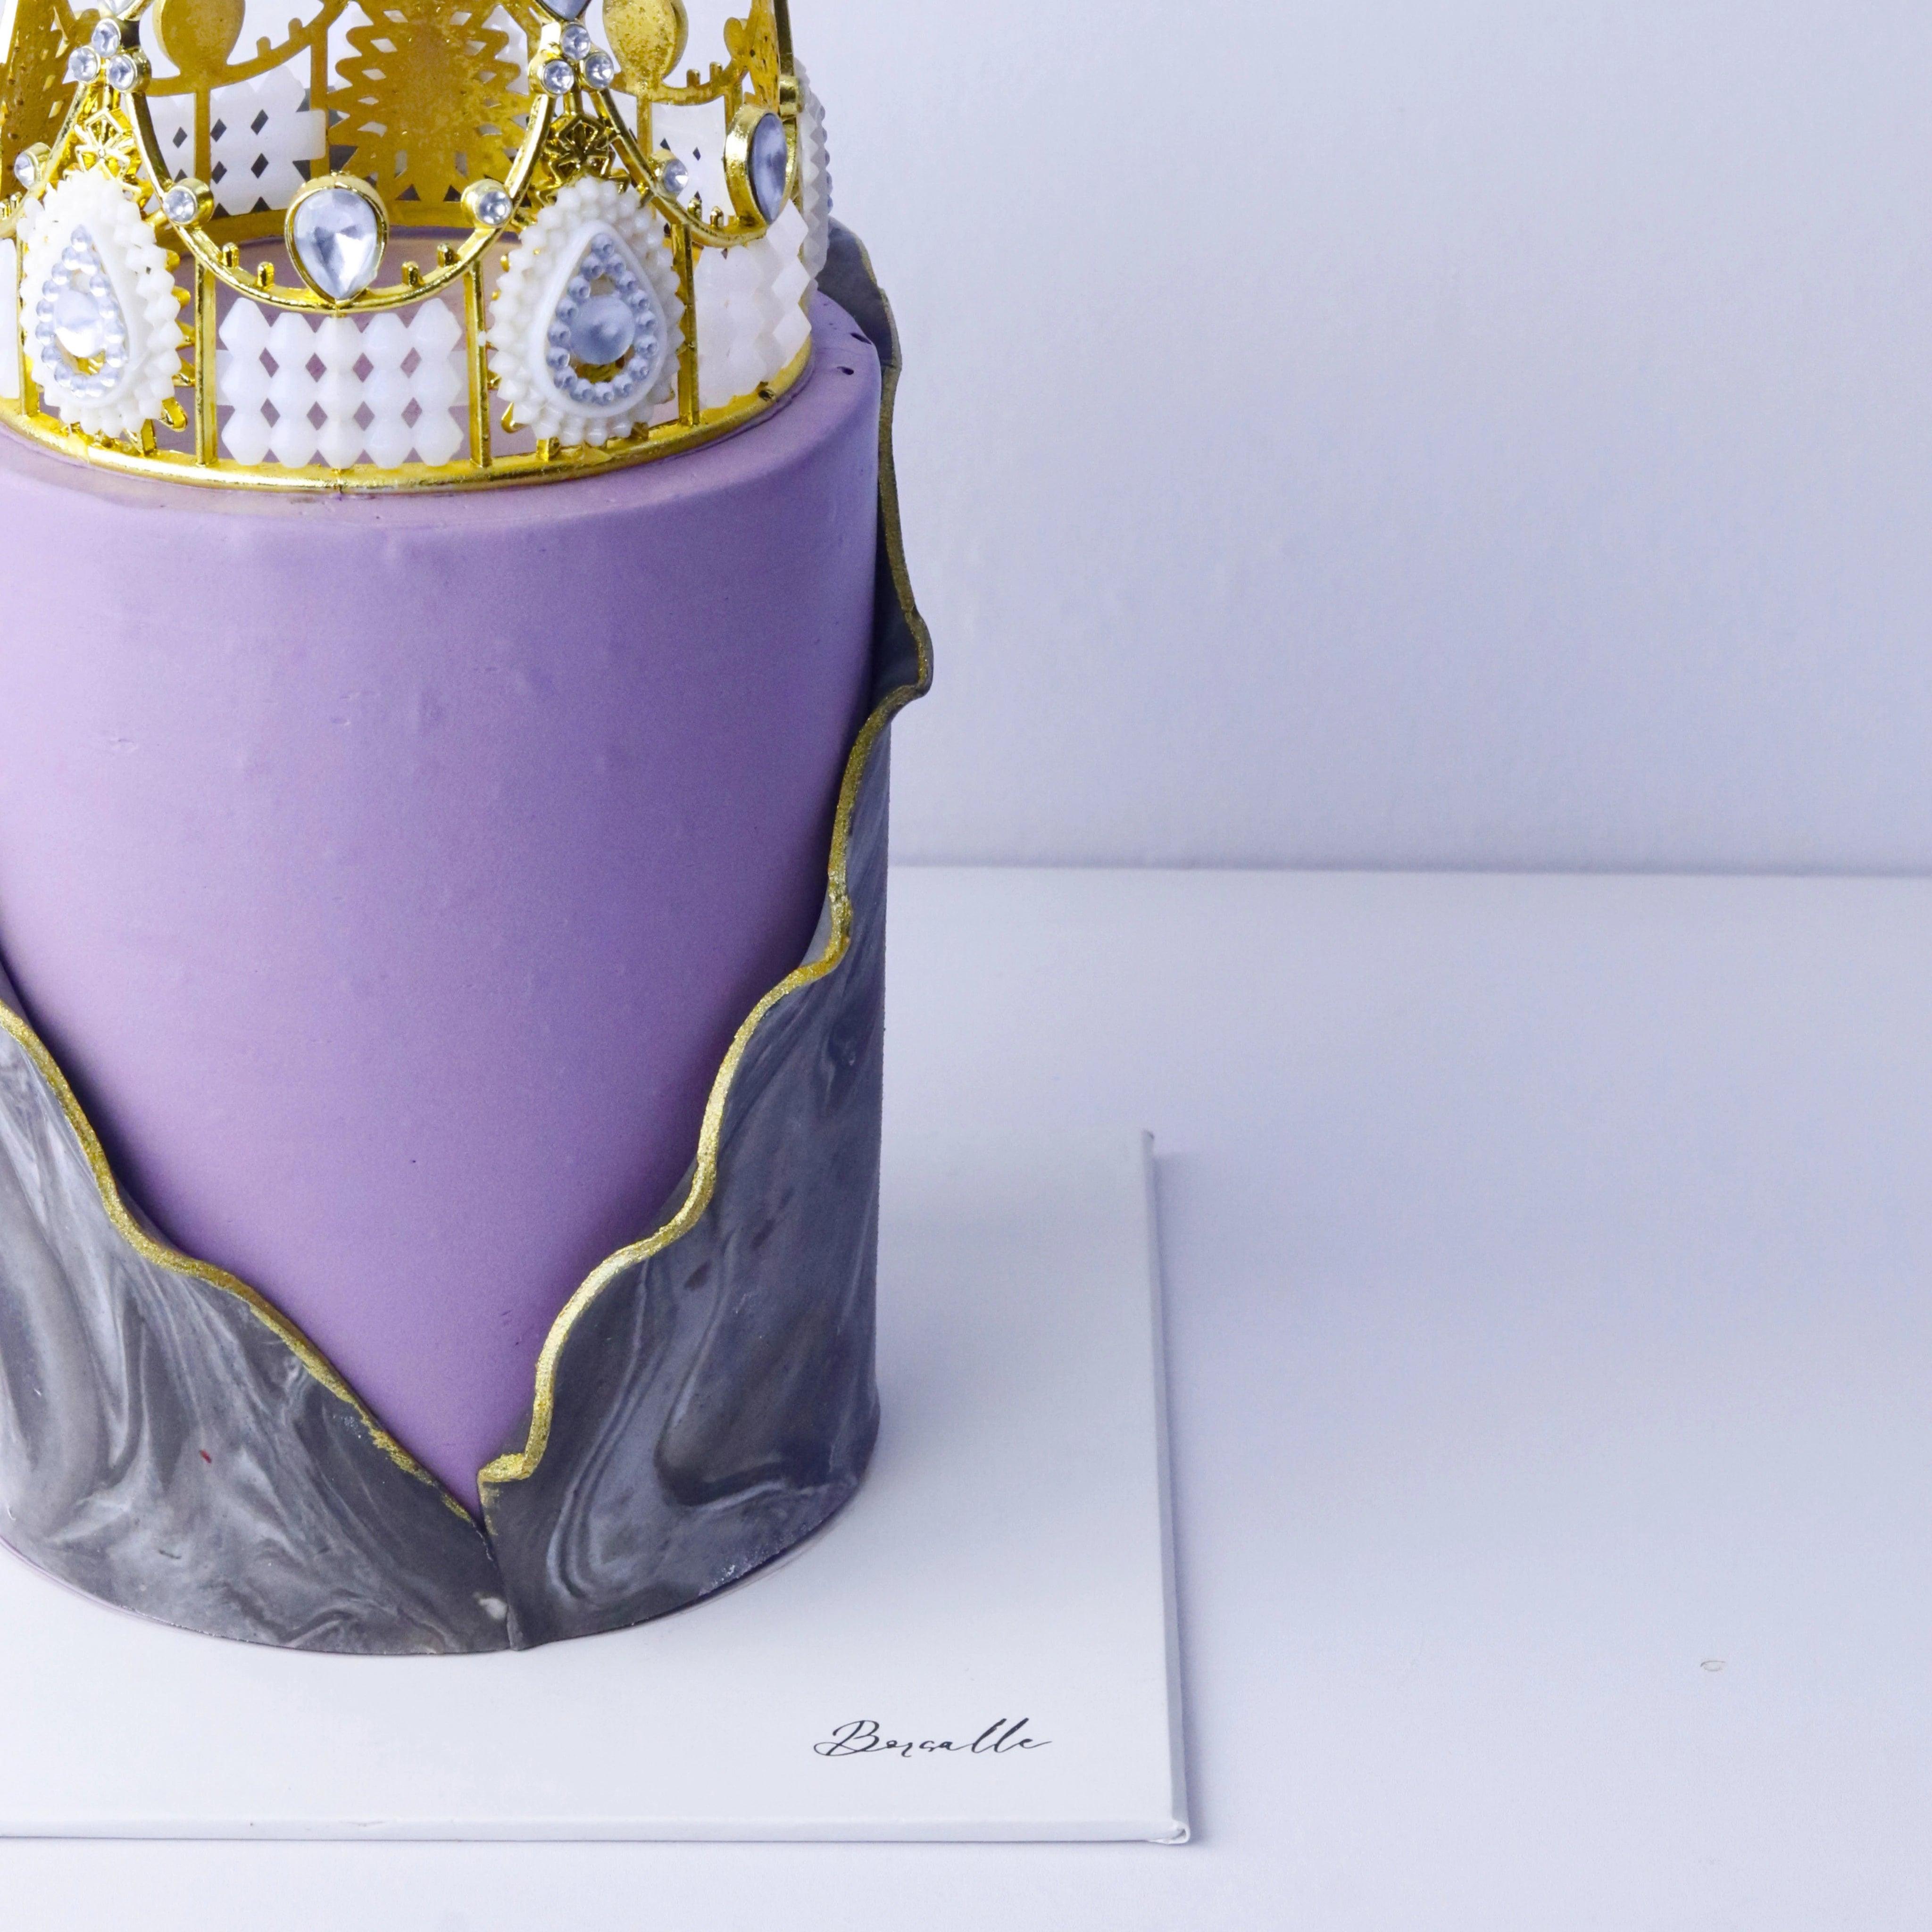 lauralovescakes...: Regal Jubilee Crown Cake